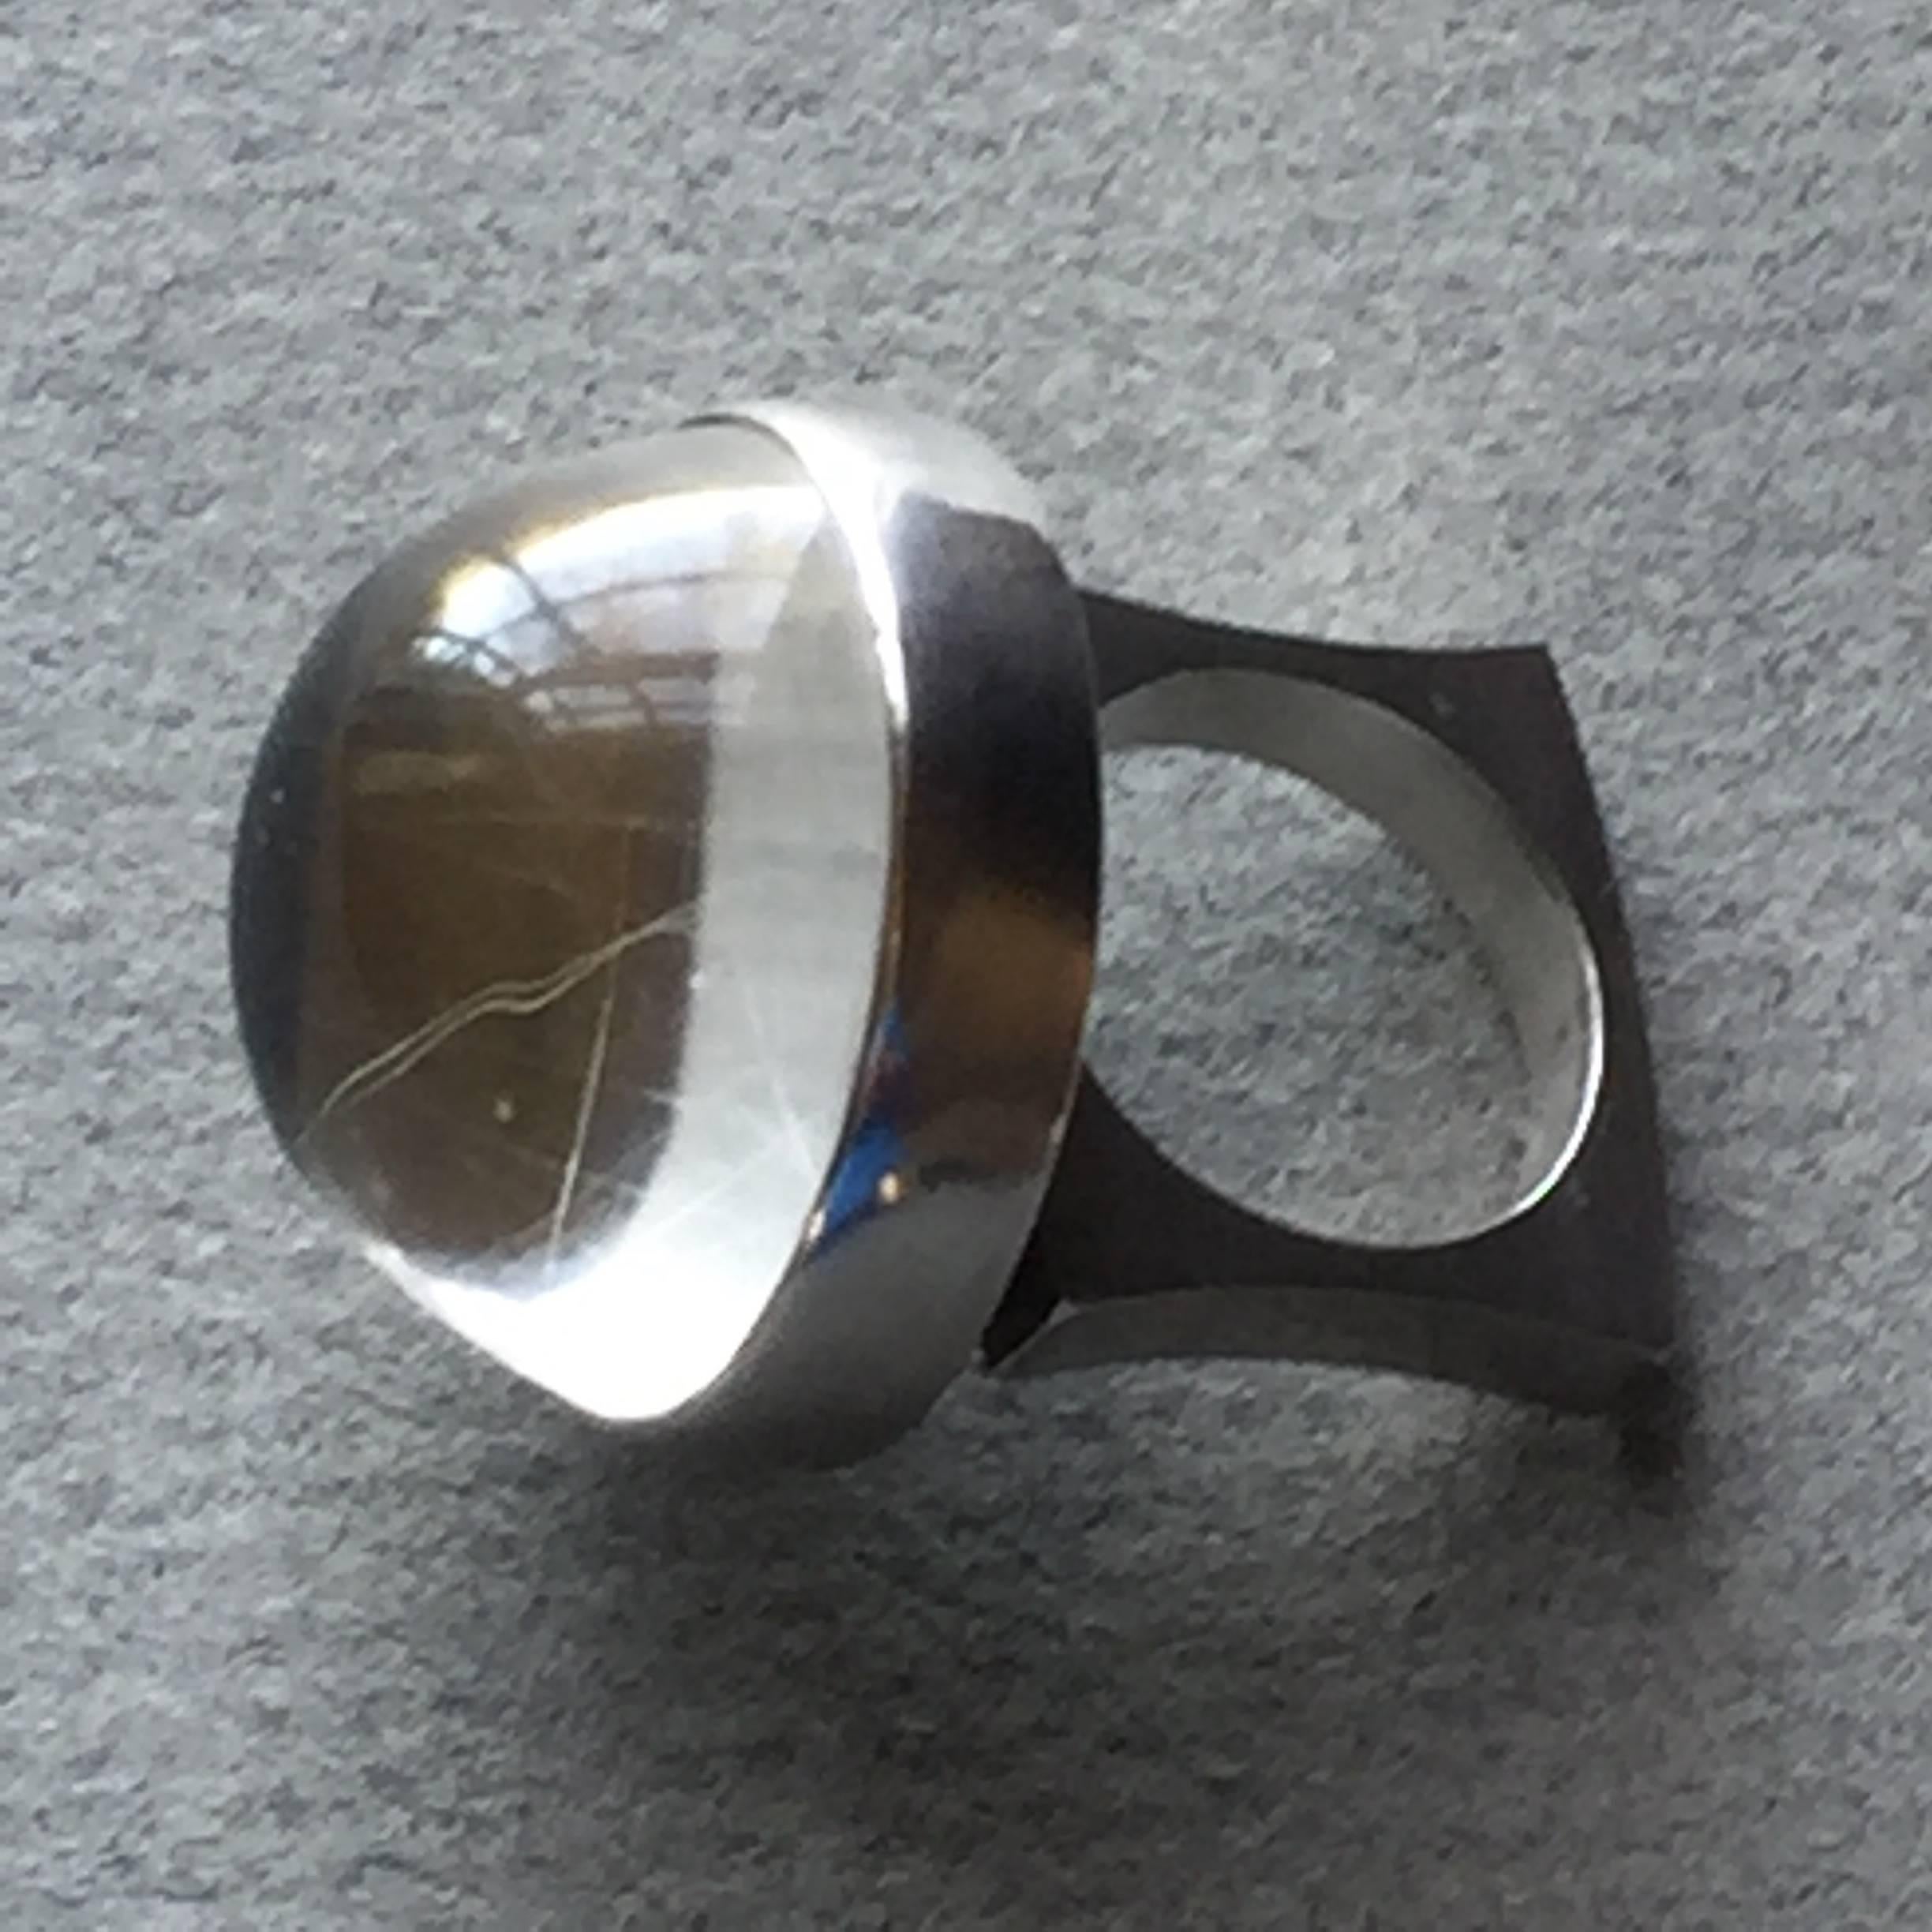 Modernist Georg Jensen Sterling Silver Ring No. 169 by Bent Gabrielsen. 